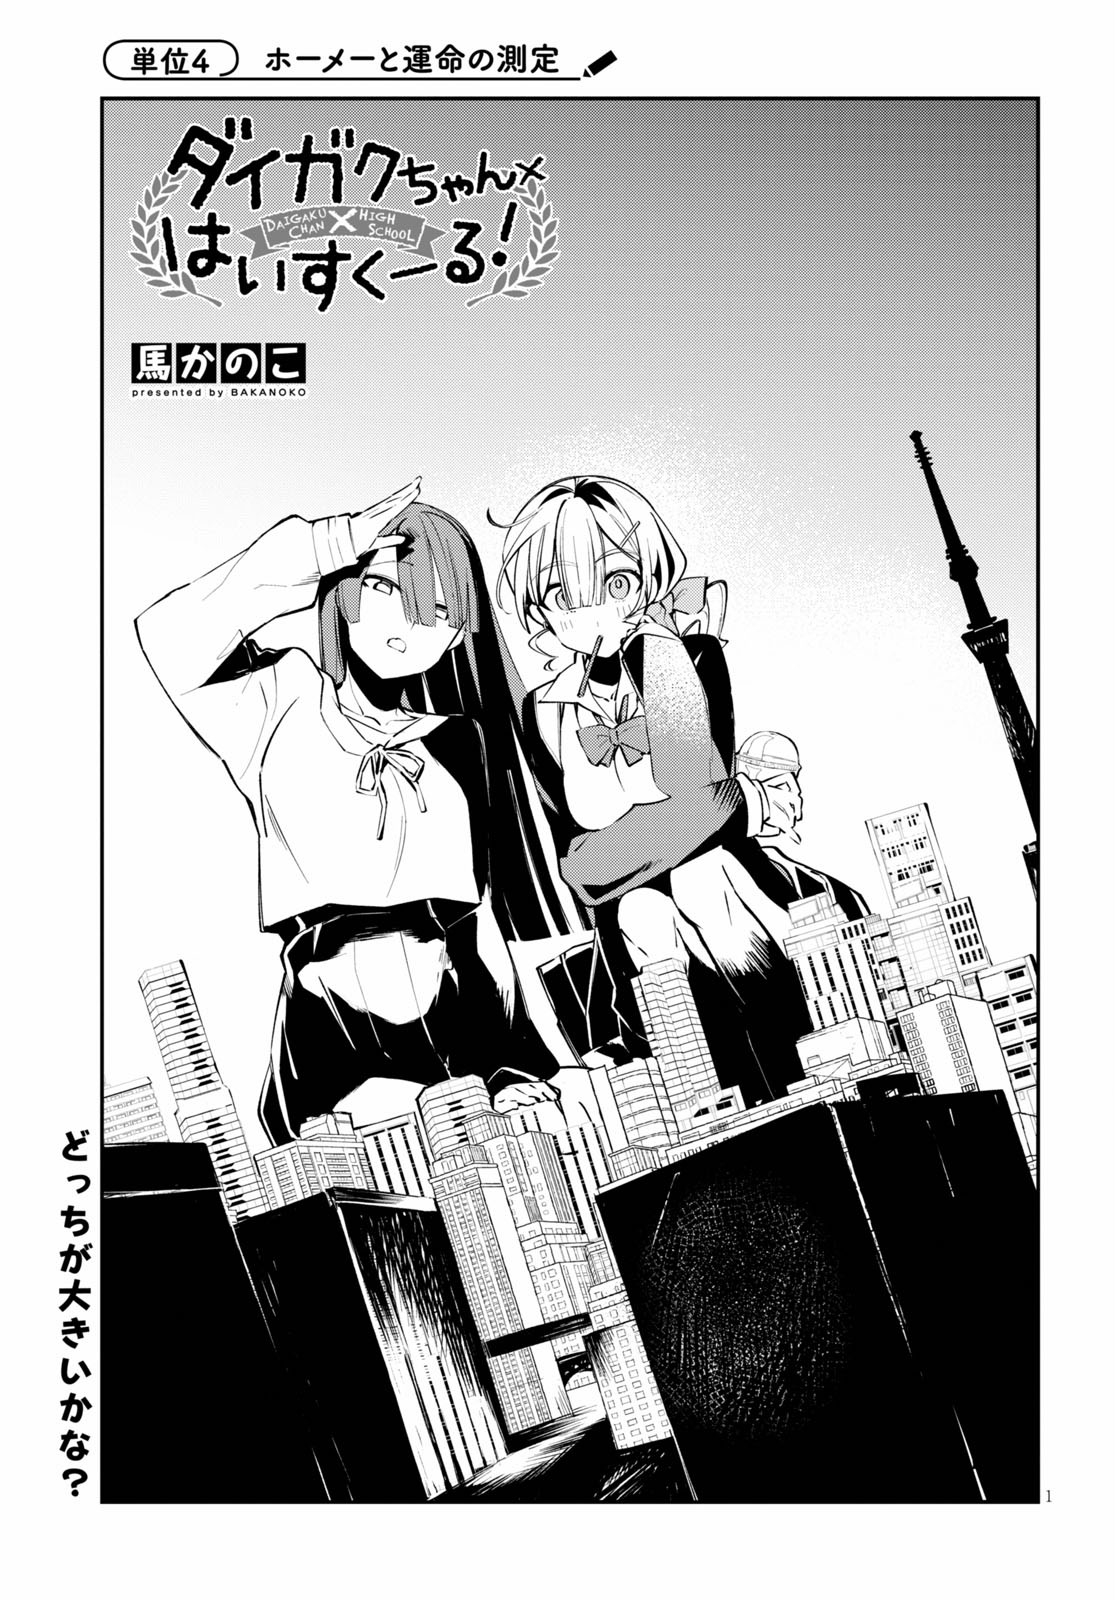 Daigaku-chan × High School - Chapter 3 - Page 1